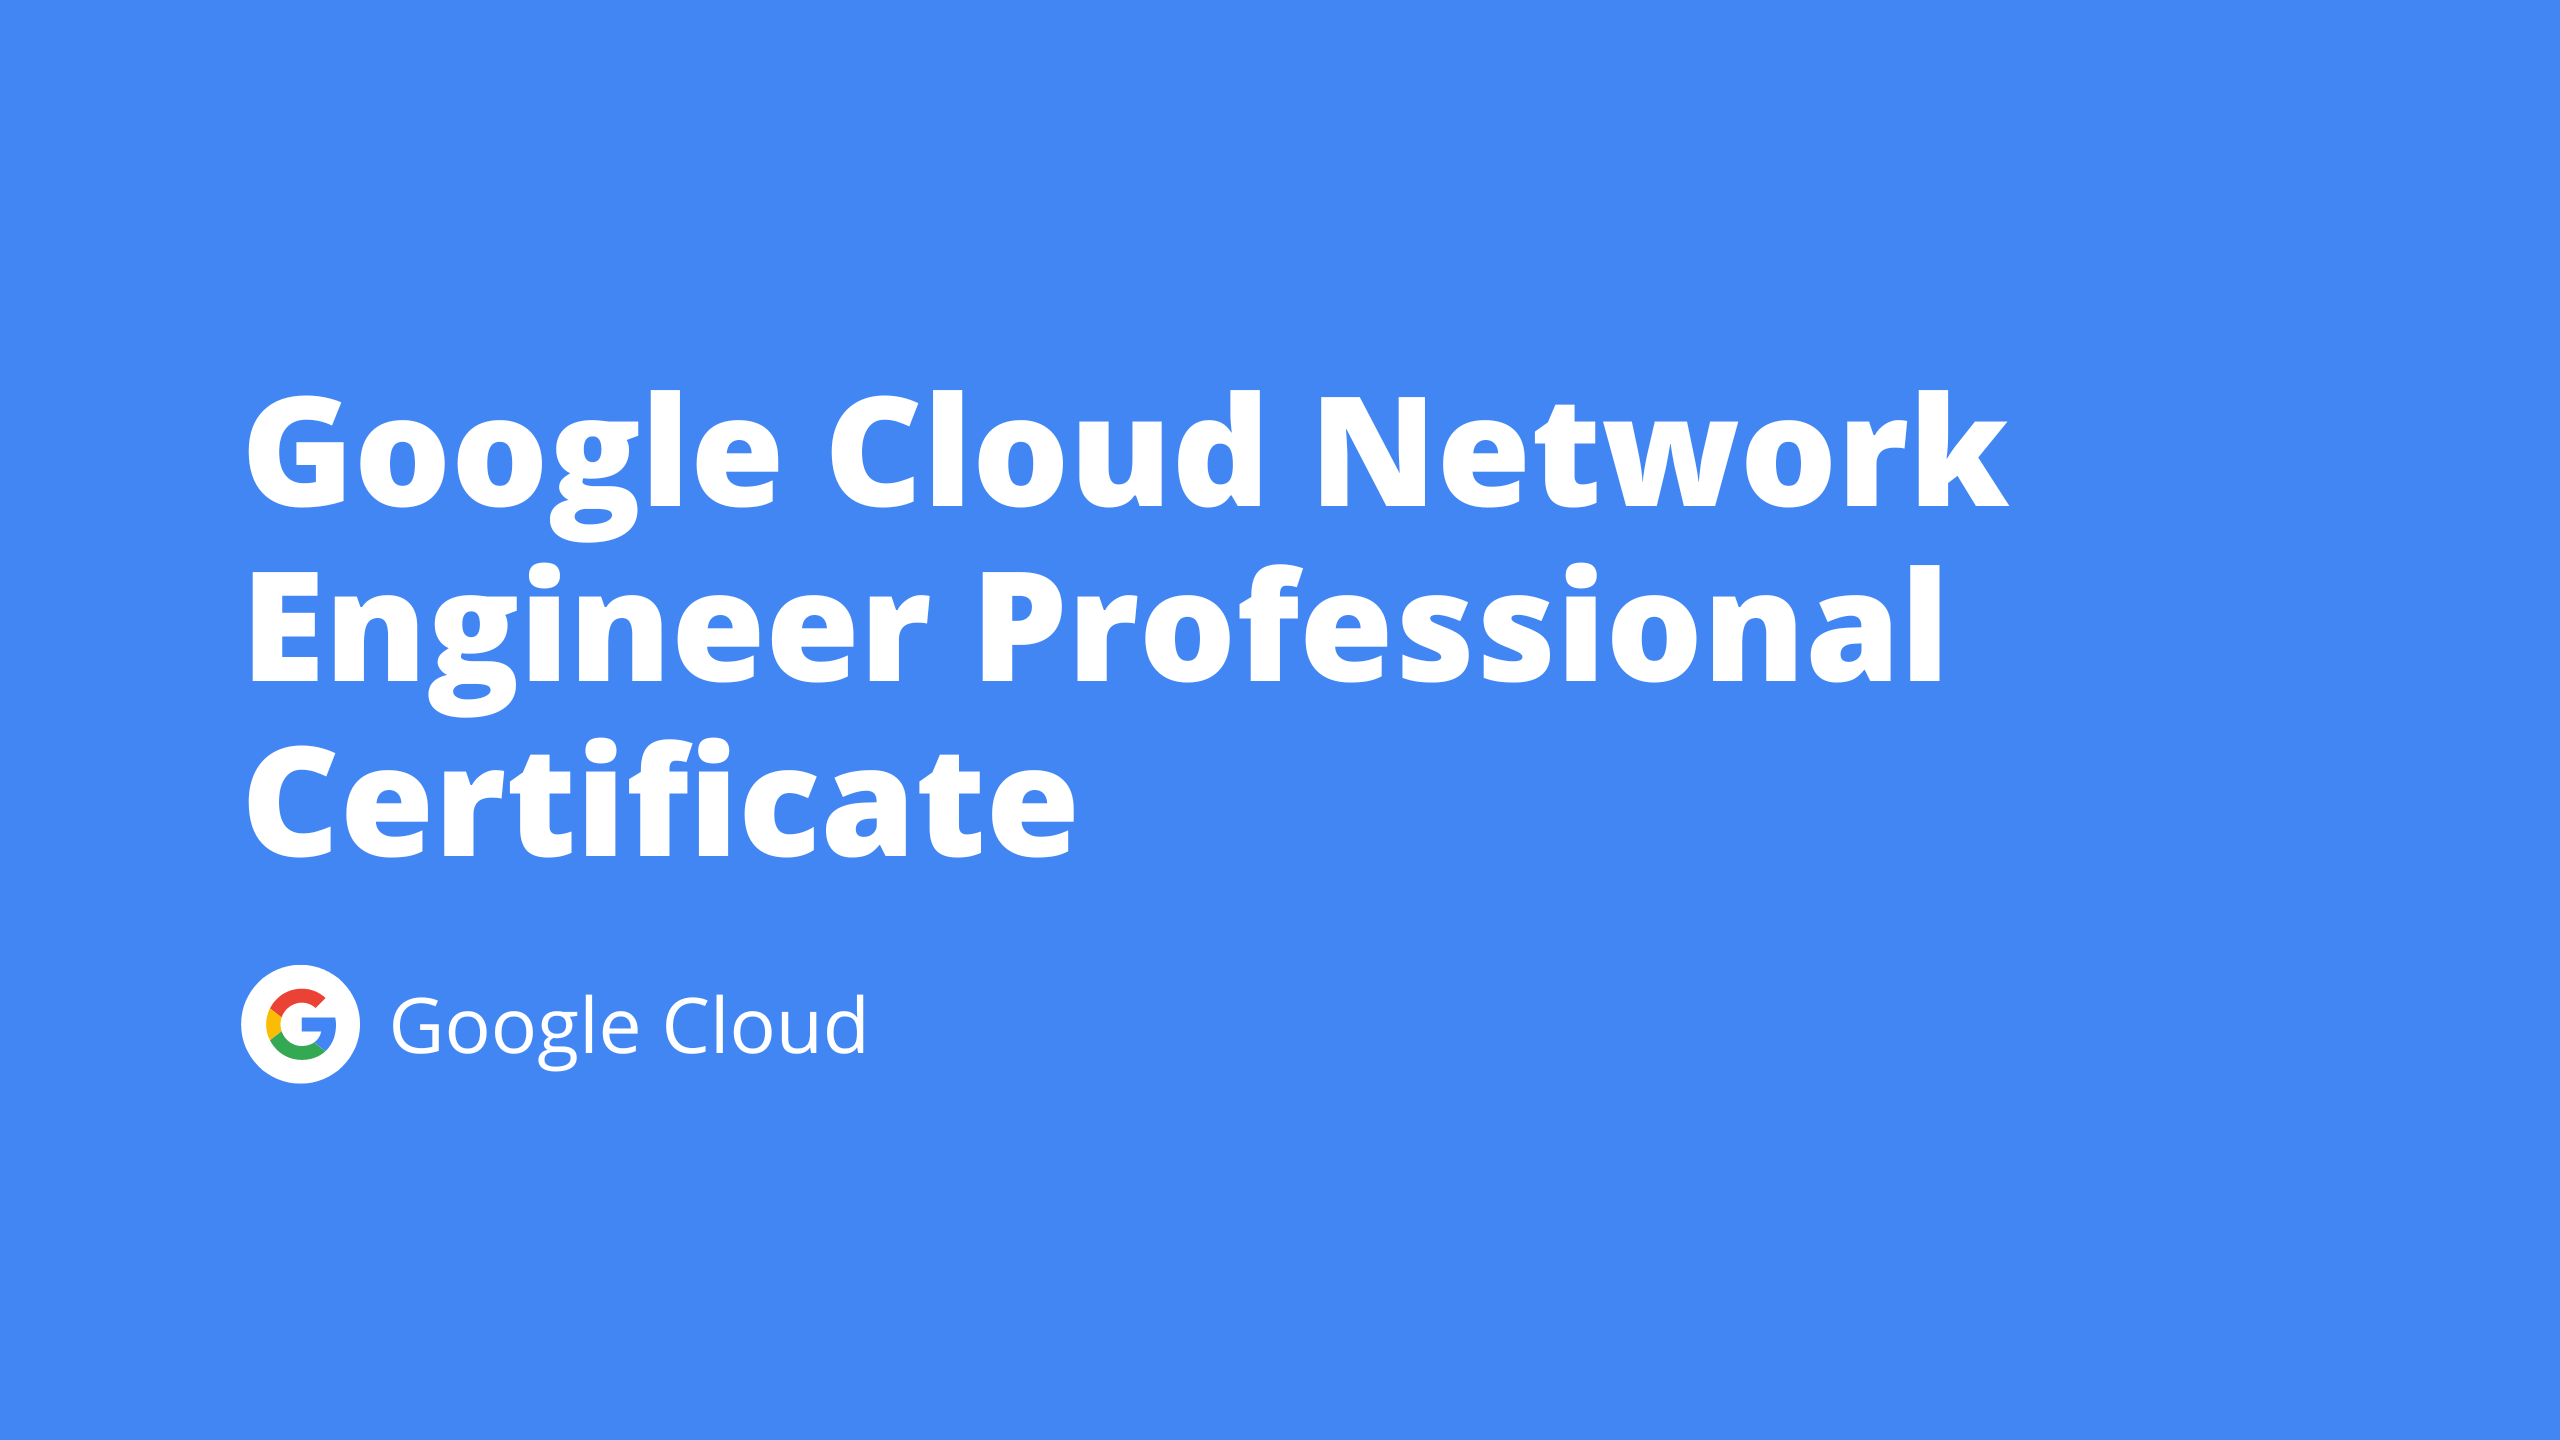 Google Cloud Network Engineer Professional Certificate